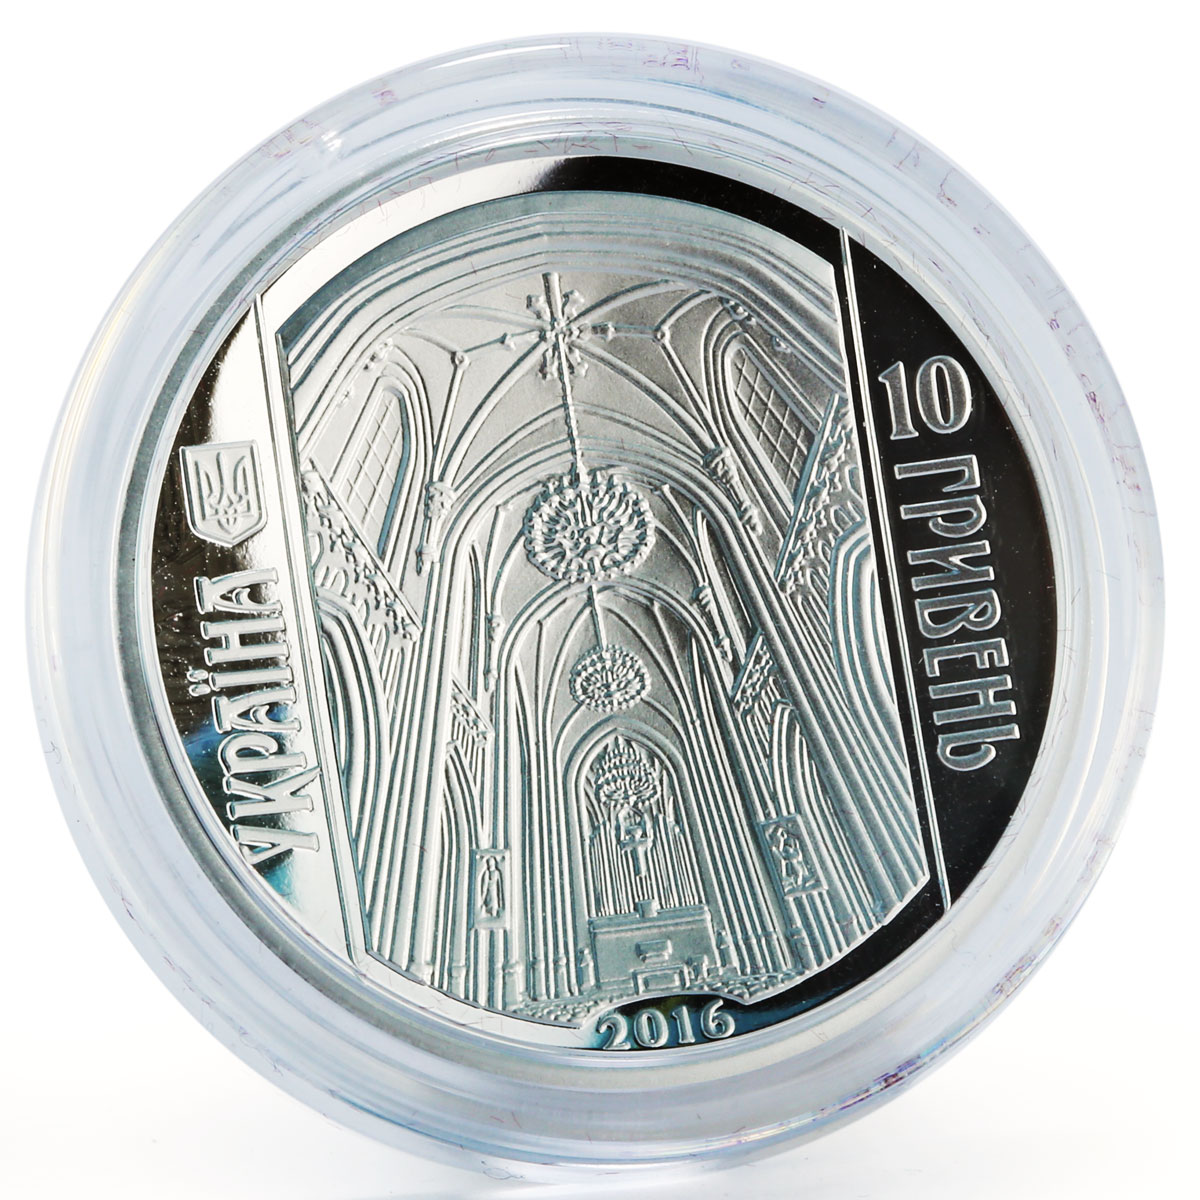 Ukraine 10 hryvnia St. Nicholas Roman Catholic Cathedral Kyiv silver coin 2016